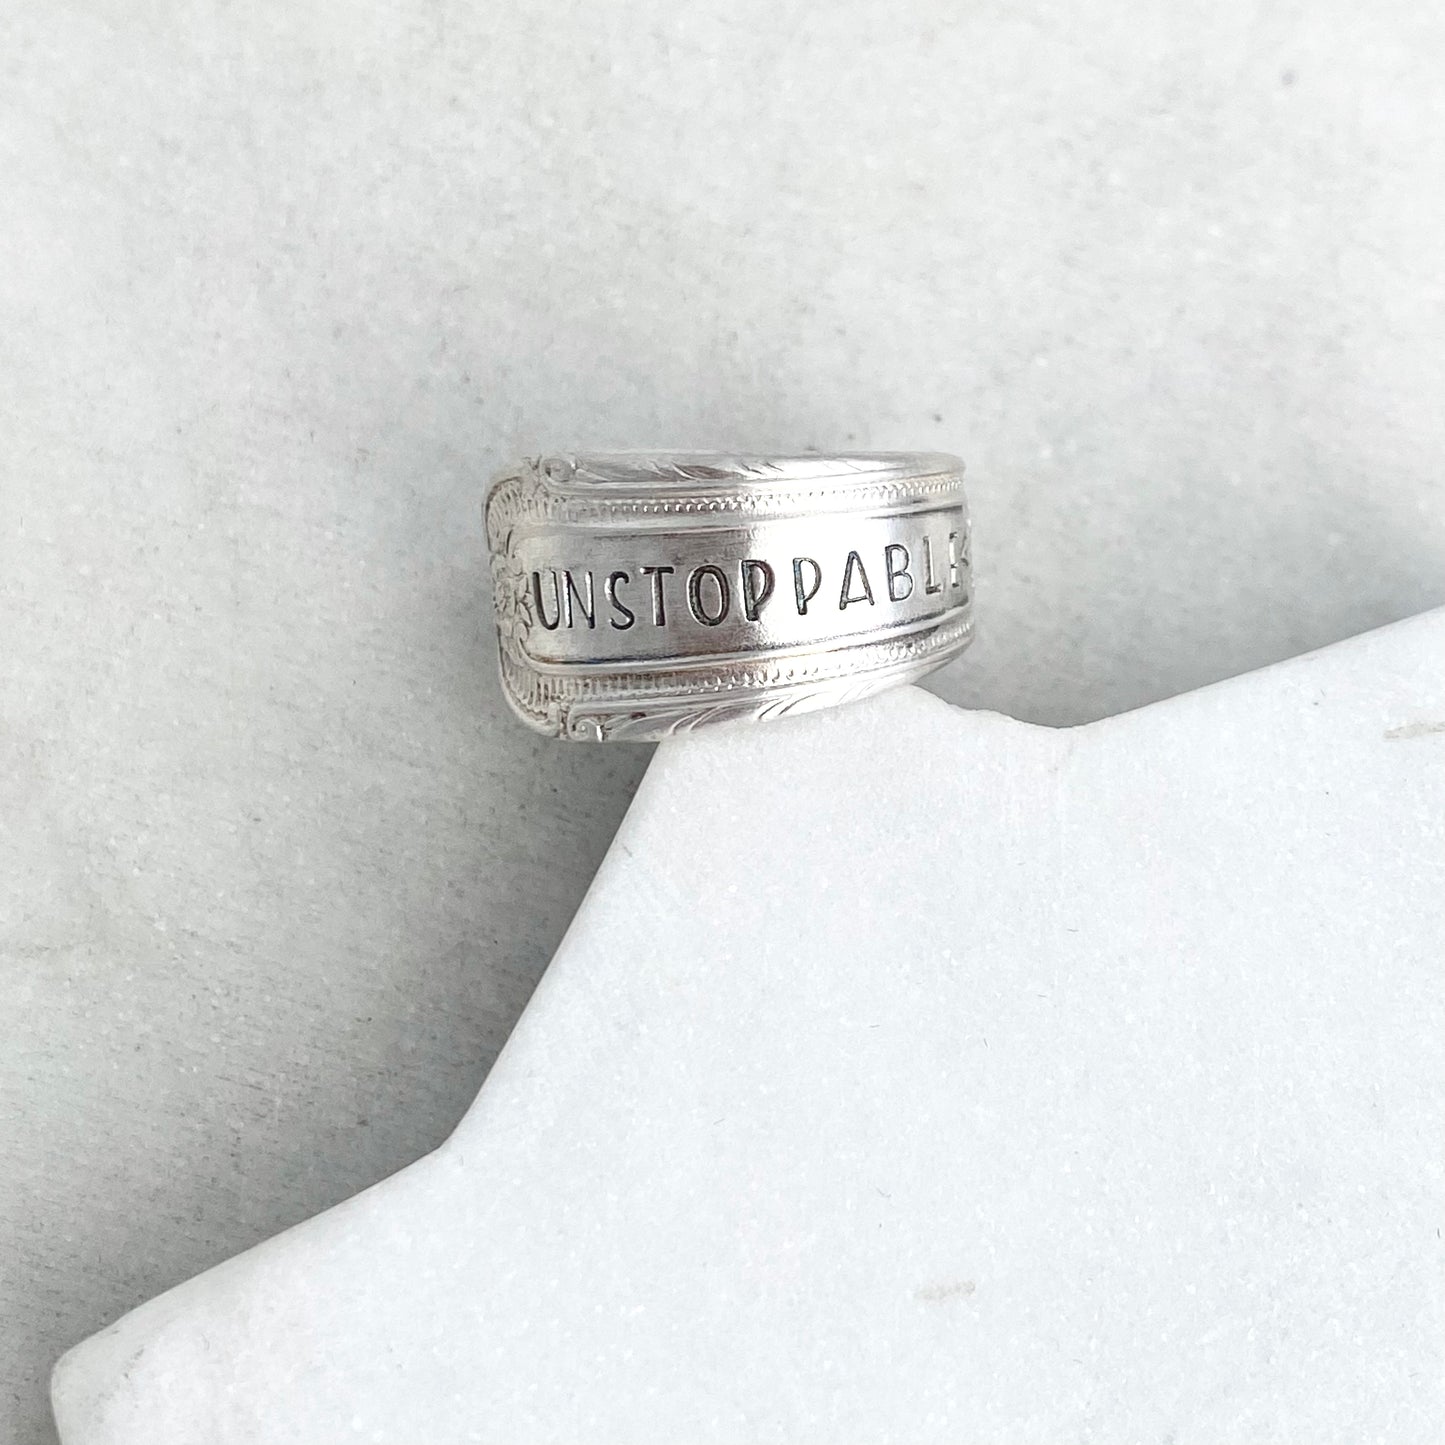 Unstoppable, Cotillion 1937, Custom Size Spoon Ring, Vintage Silverware Ring Rings callistafaye   